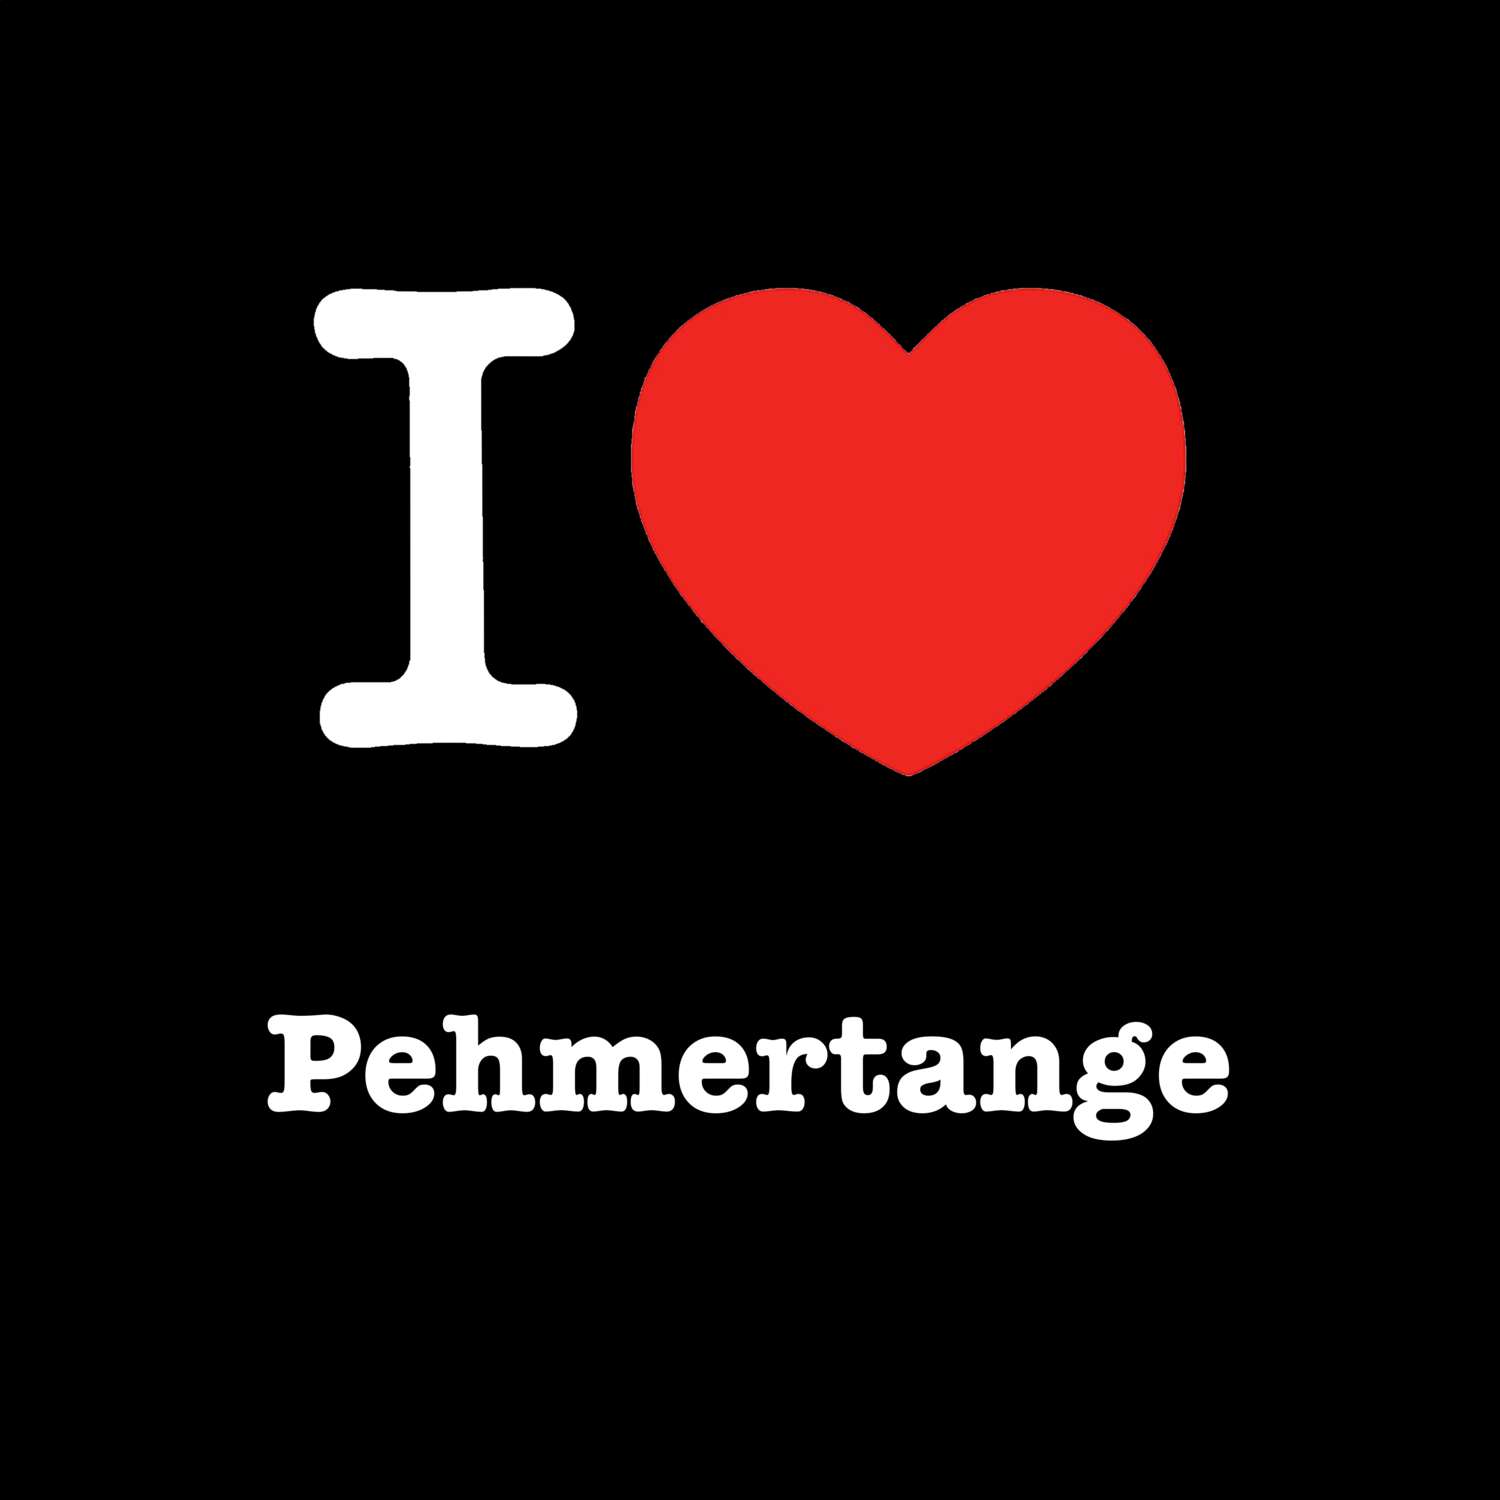 Pehmertange T-Shirt »I love«